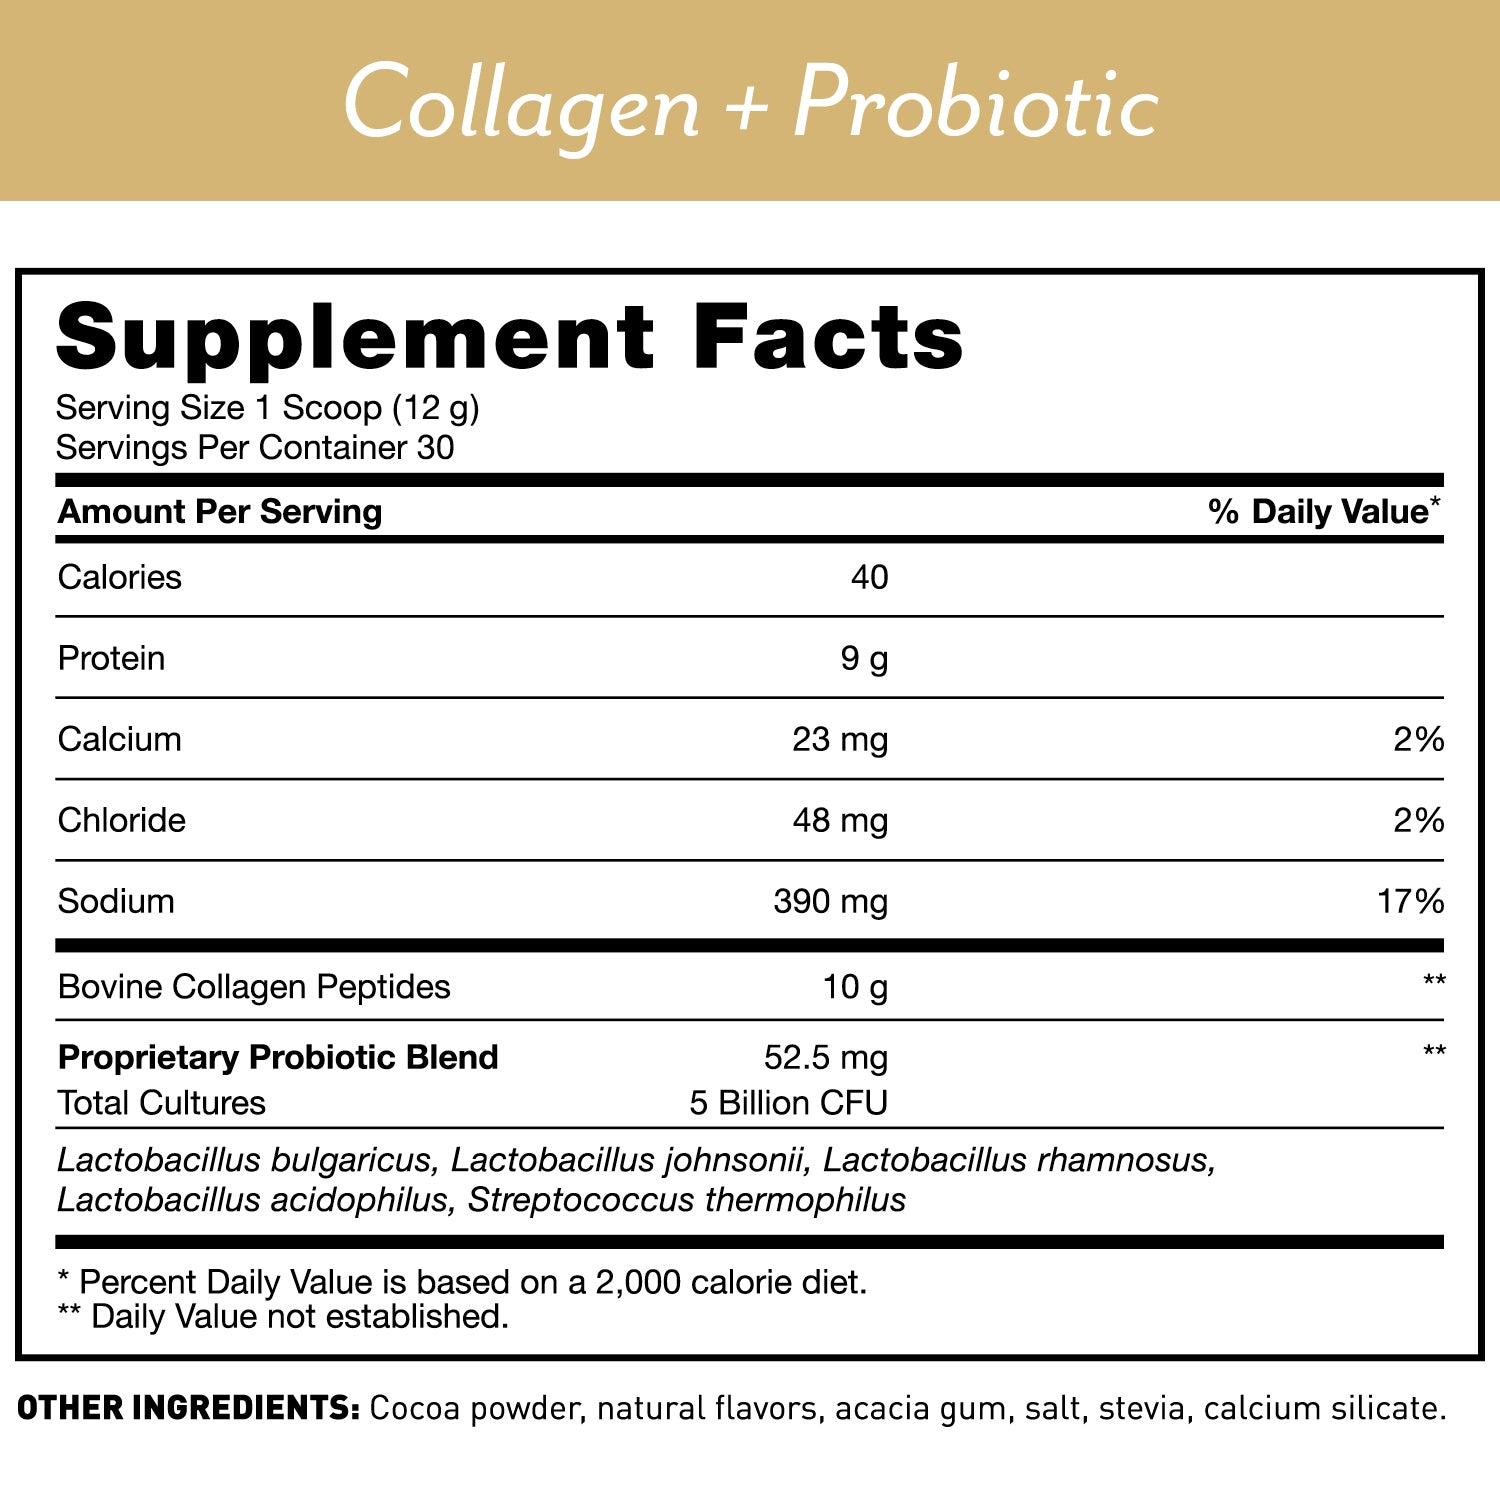 Collagen + Probiotic ingredeints - Amy Myers MD®